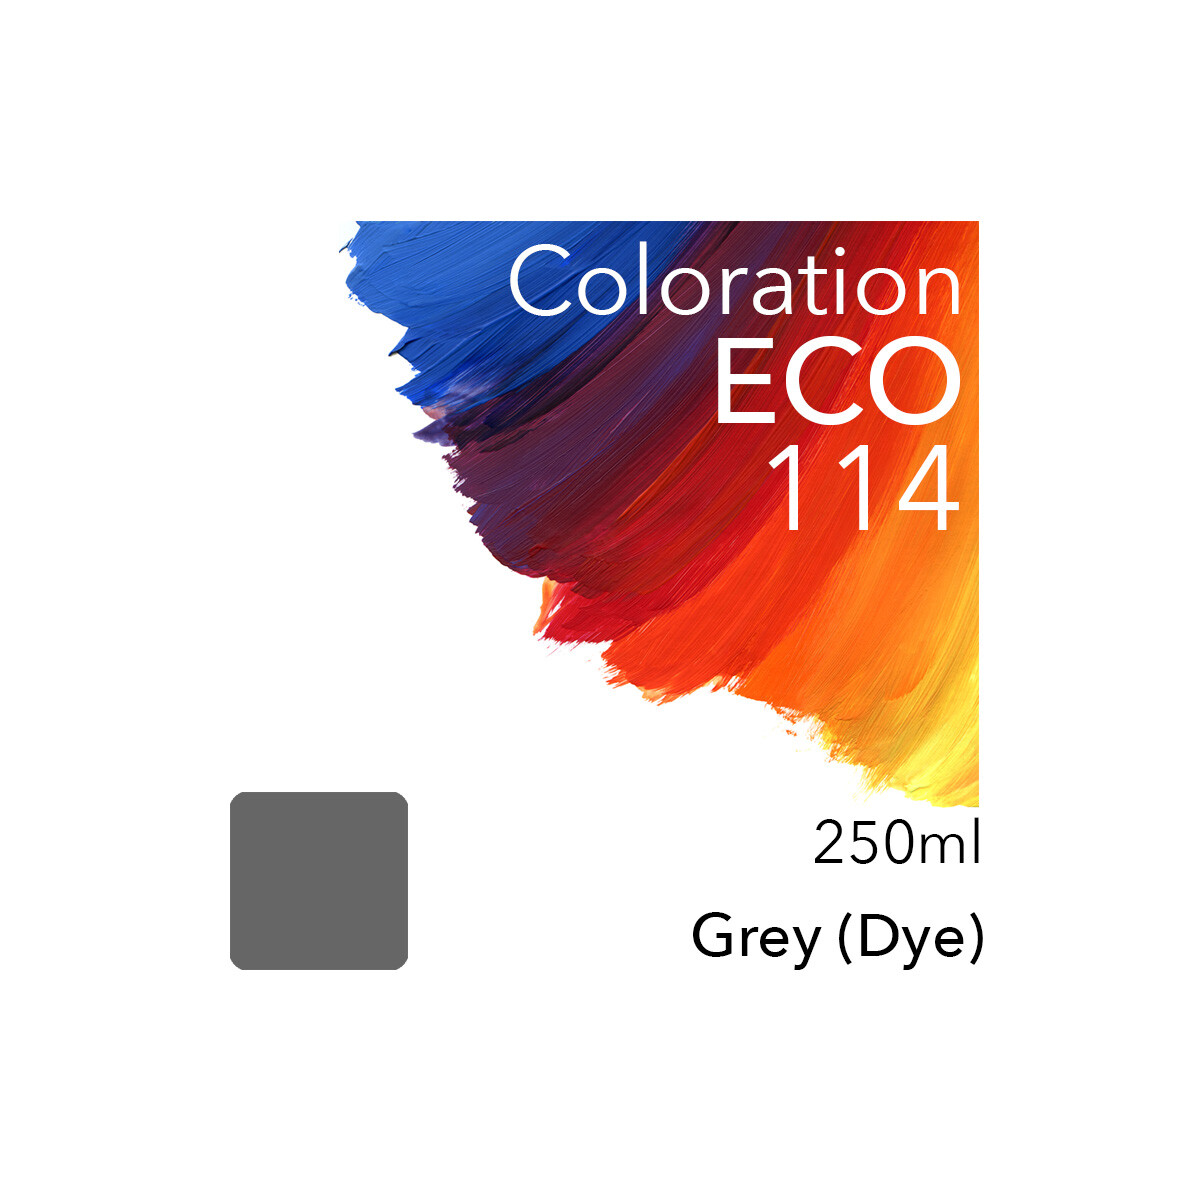 Coloration ECO kompatibel zu Epson 114 GY (Grey) 250ml